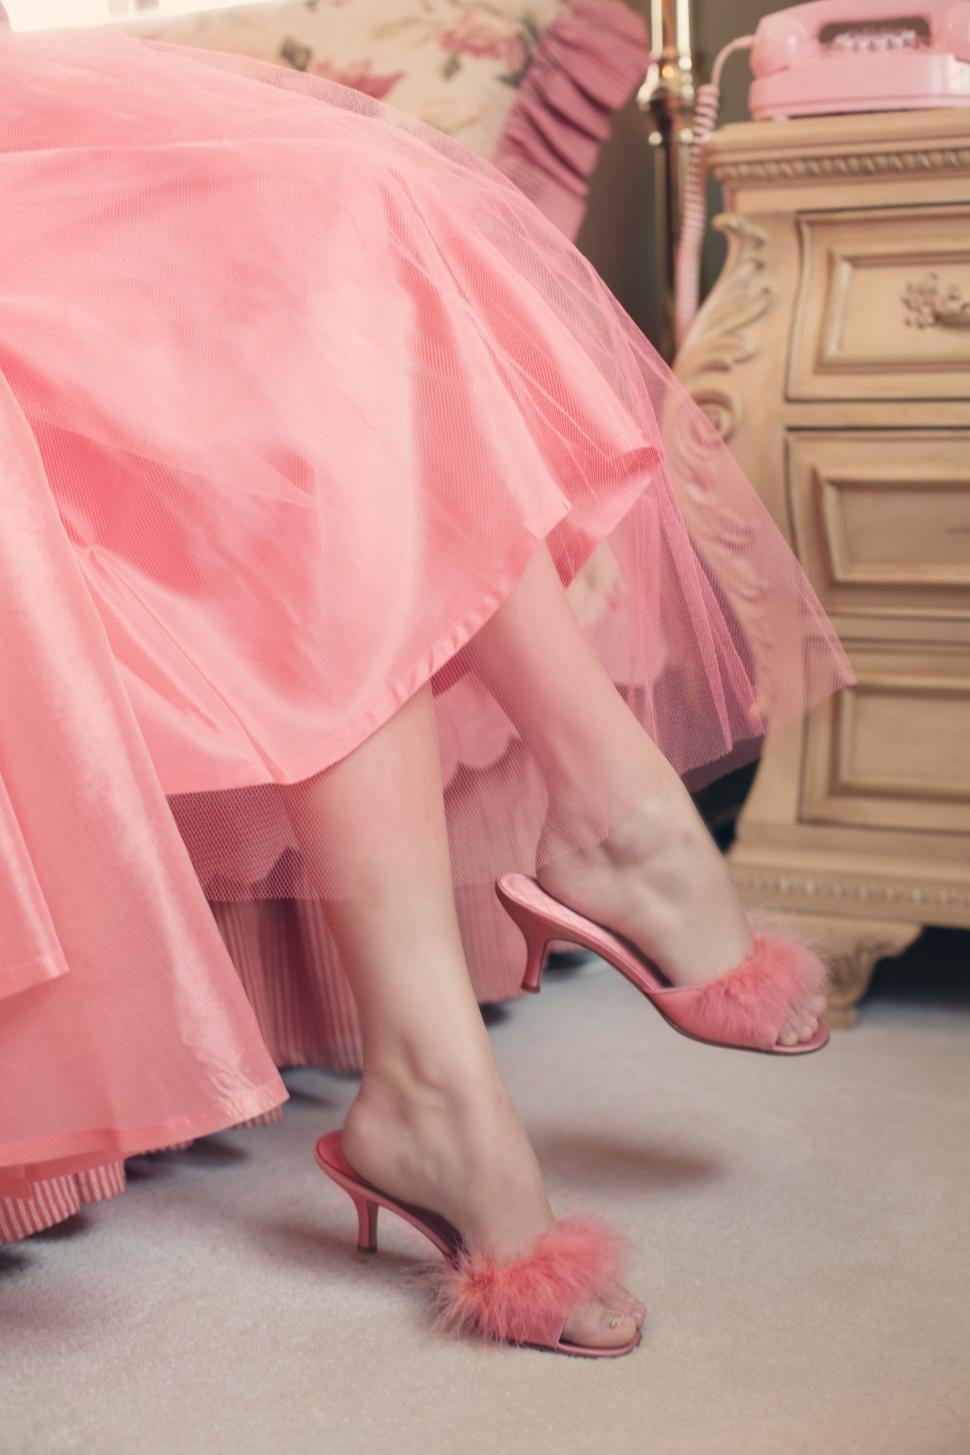 Free Image of Woman Legs With Pink heels in Bedroom 